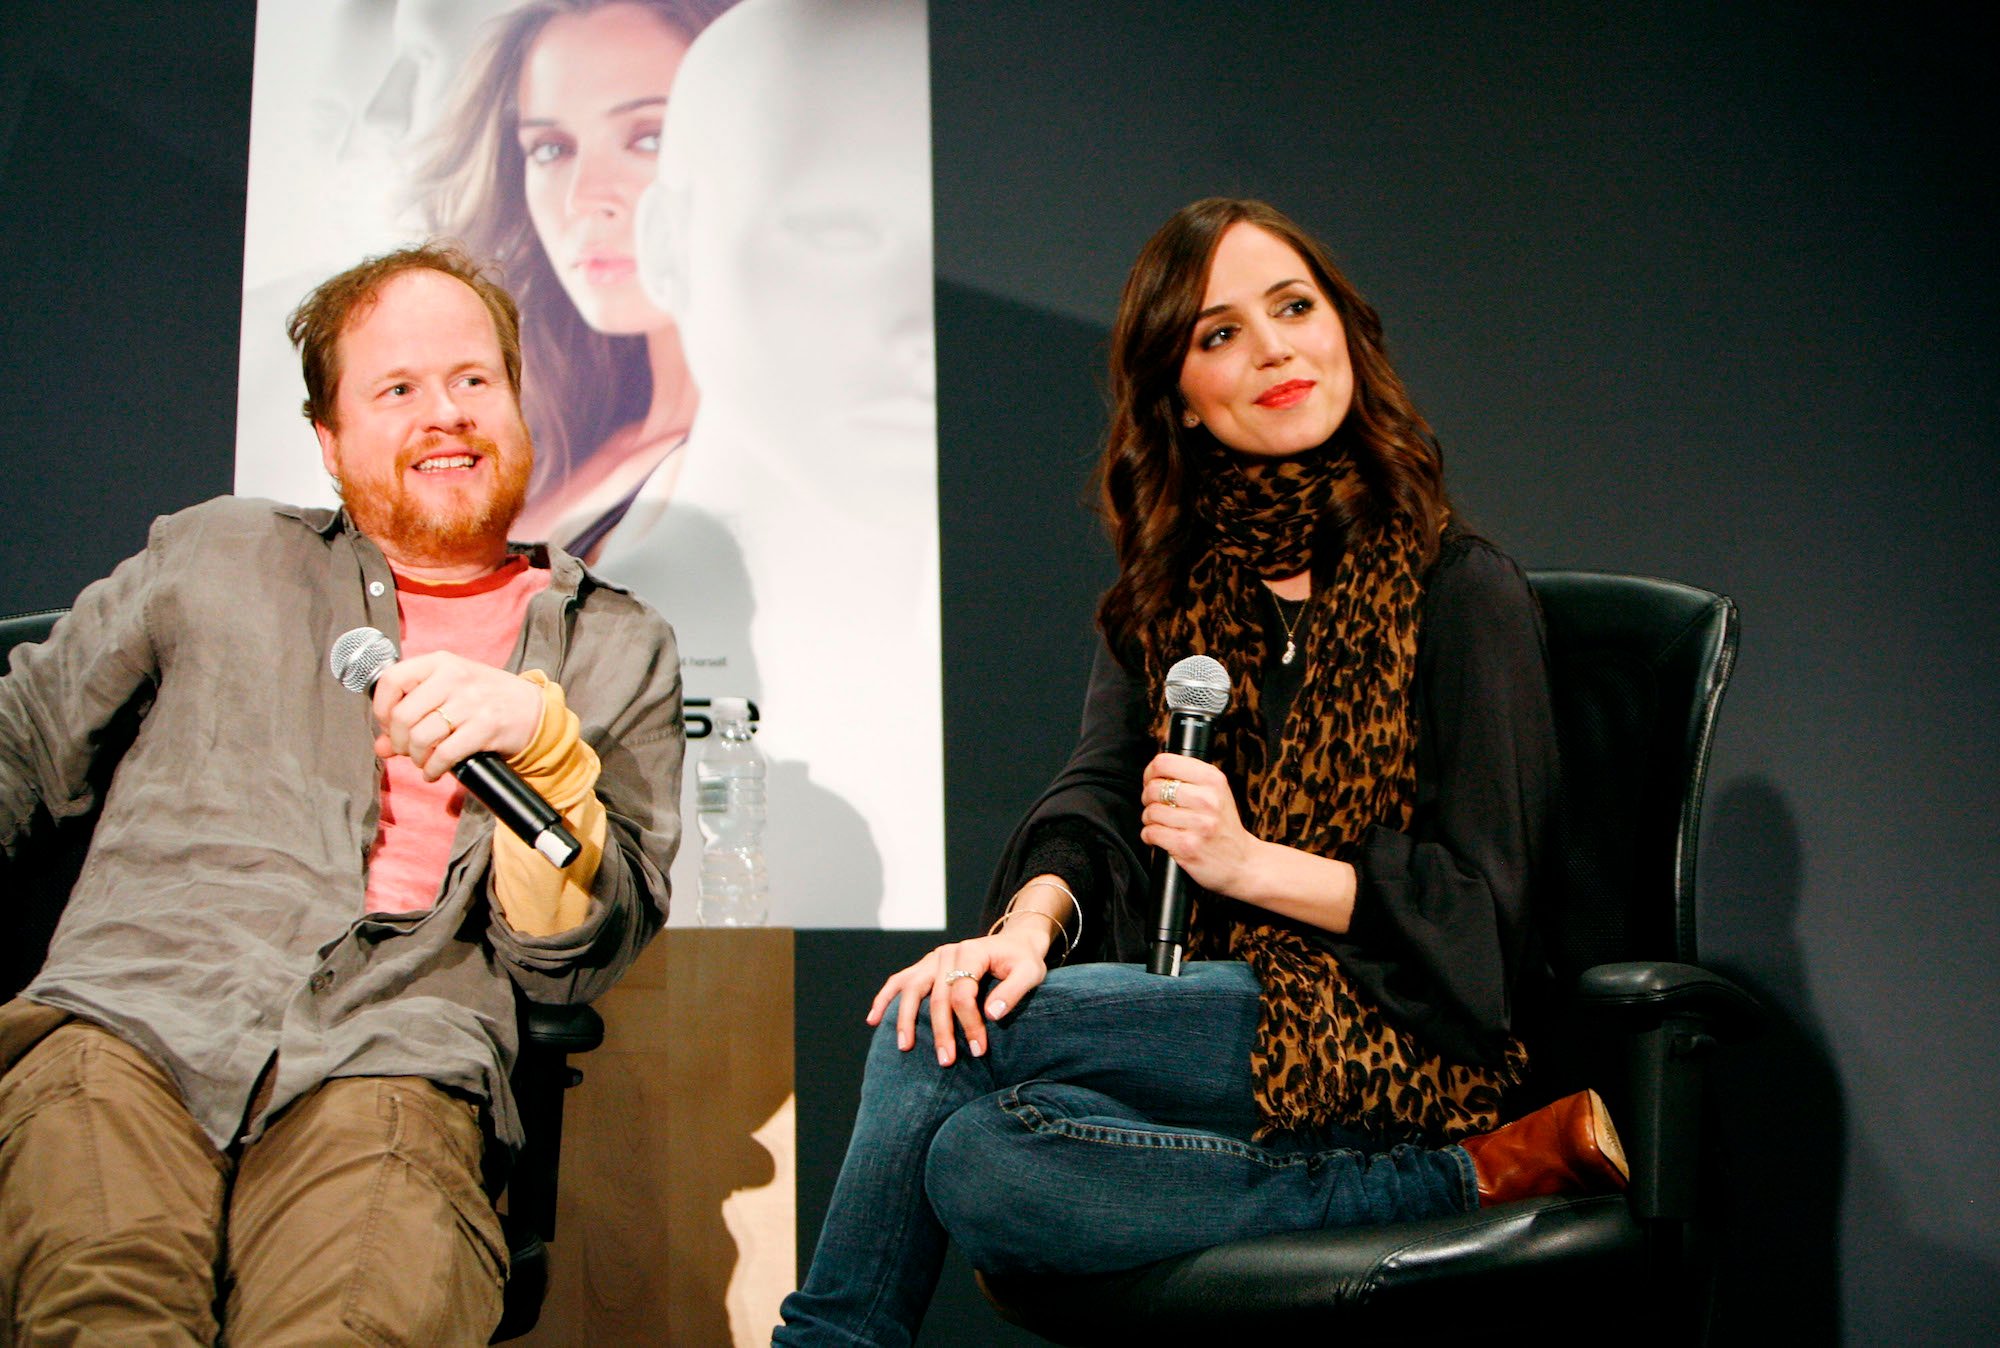 Joss Whedon and Eliza Dushku seated, holding microphones